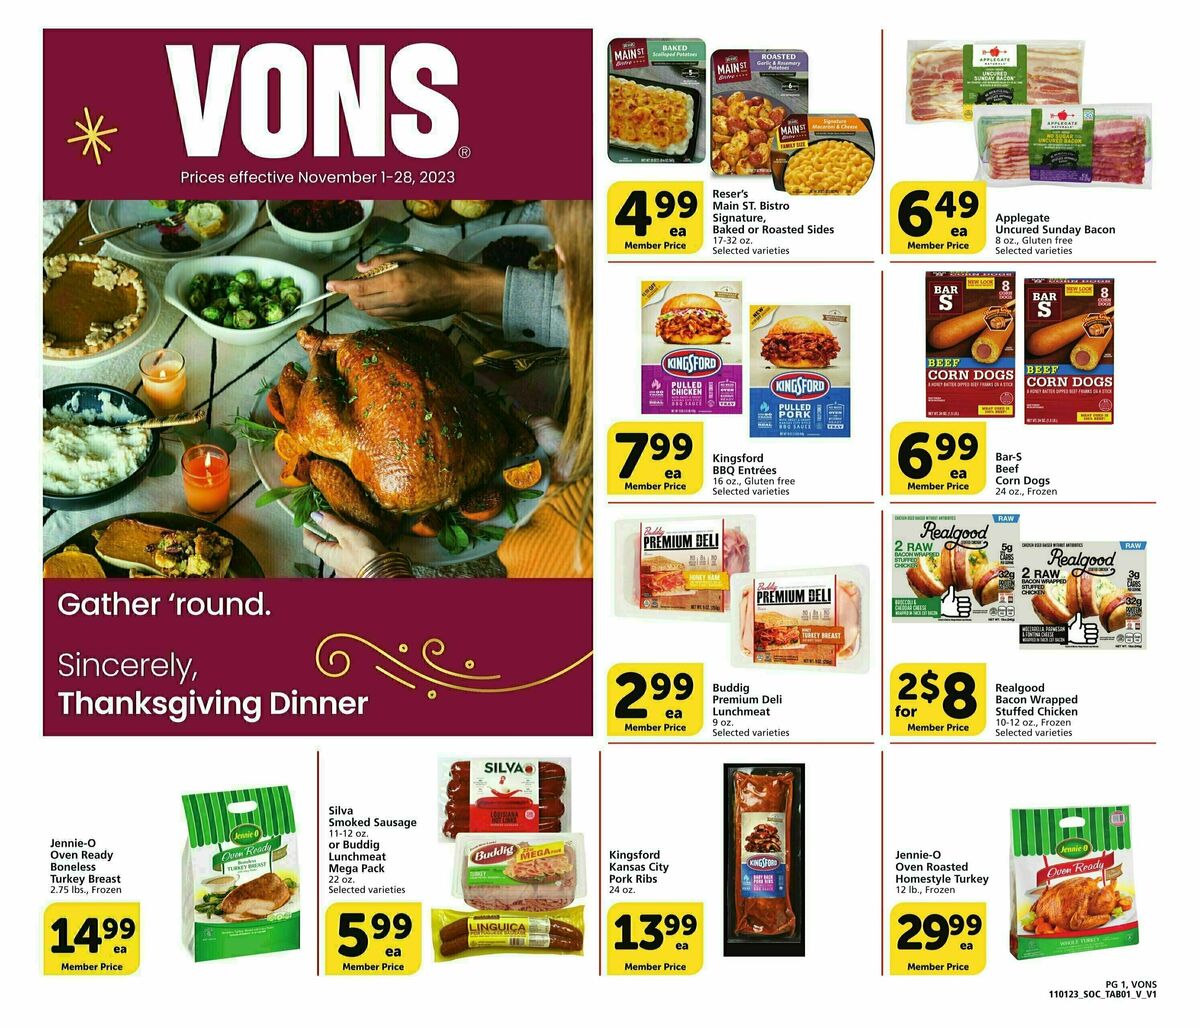 Vons Big Book of Savings Weekly Ad from November 1